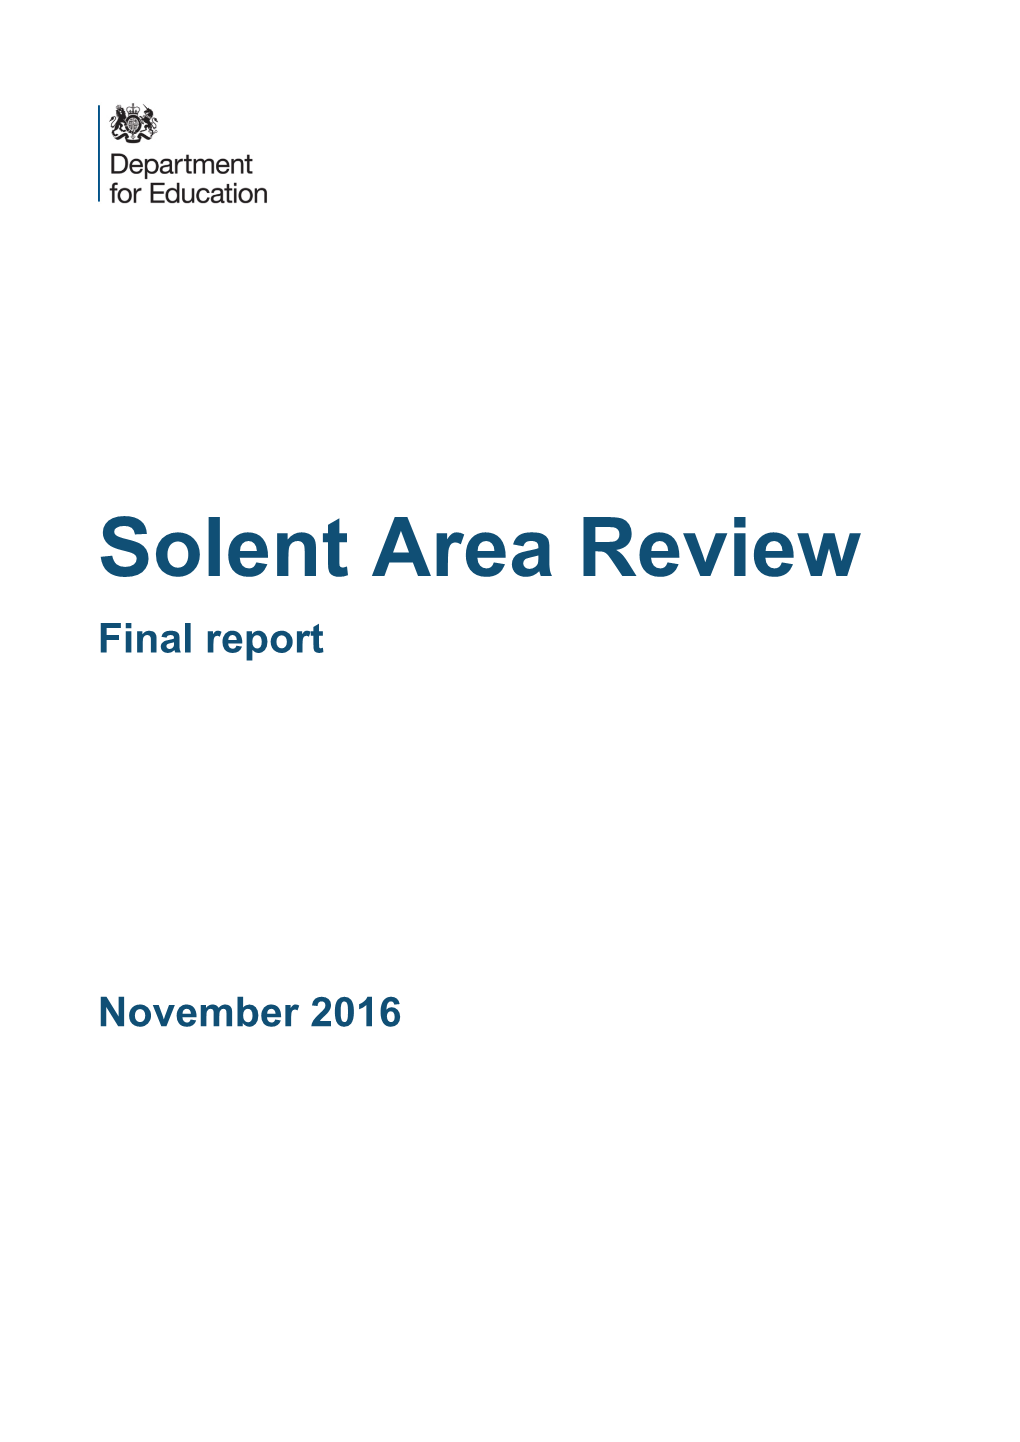 Solent Area Review Final Report